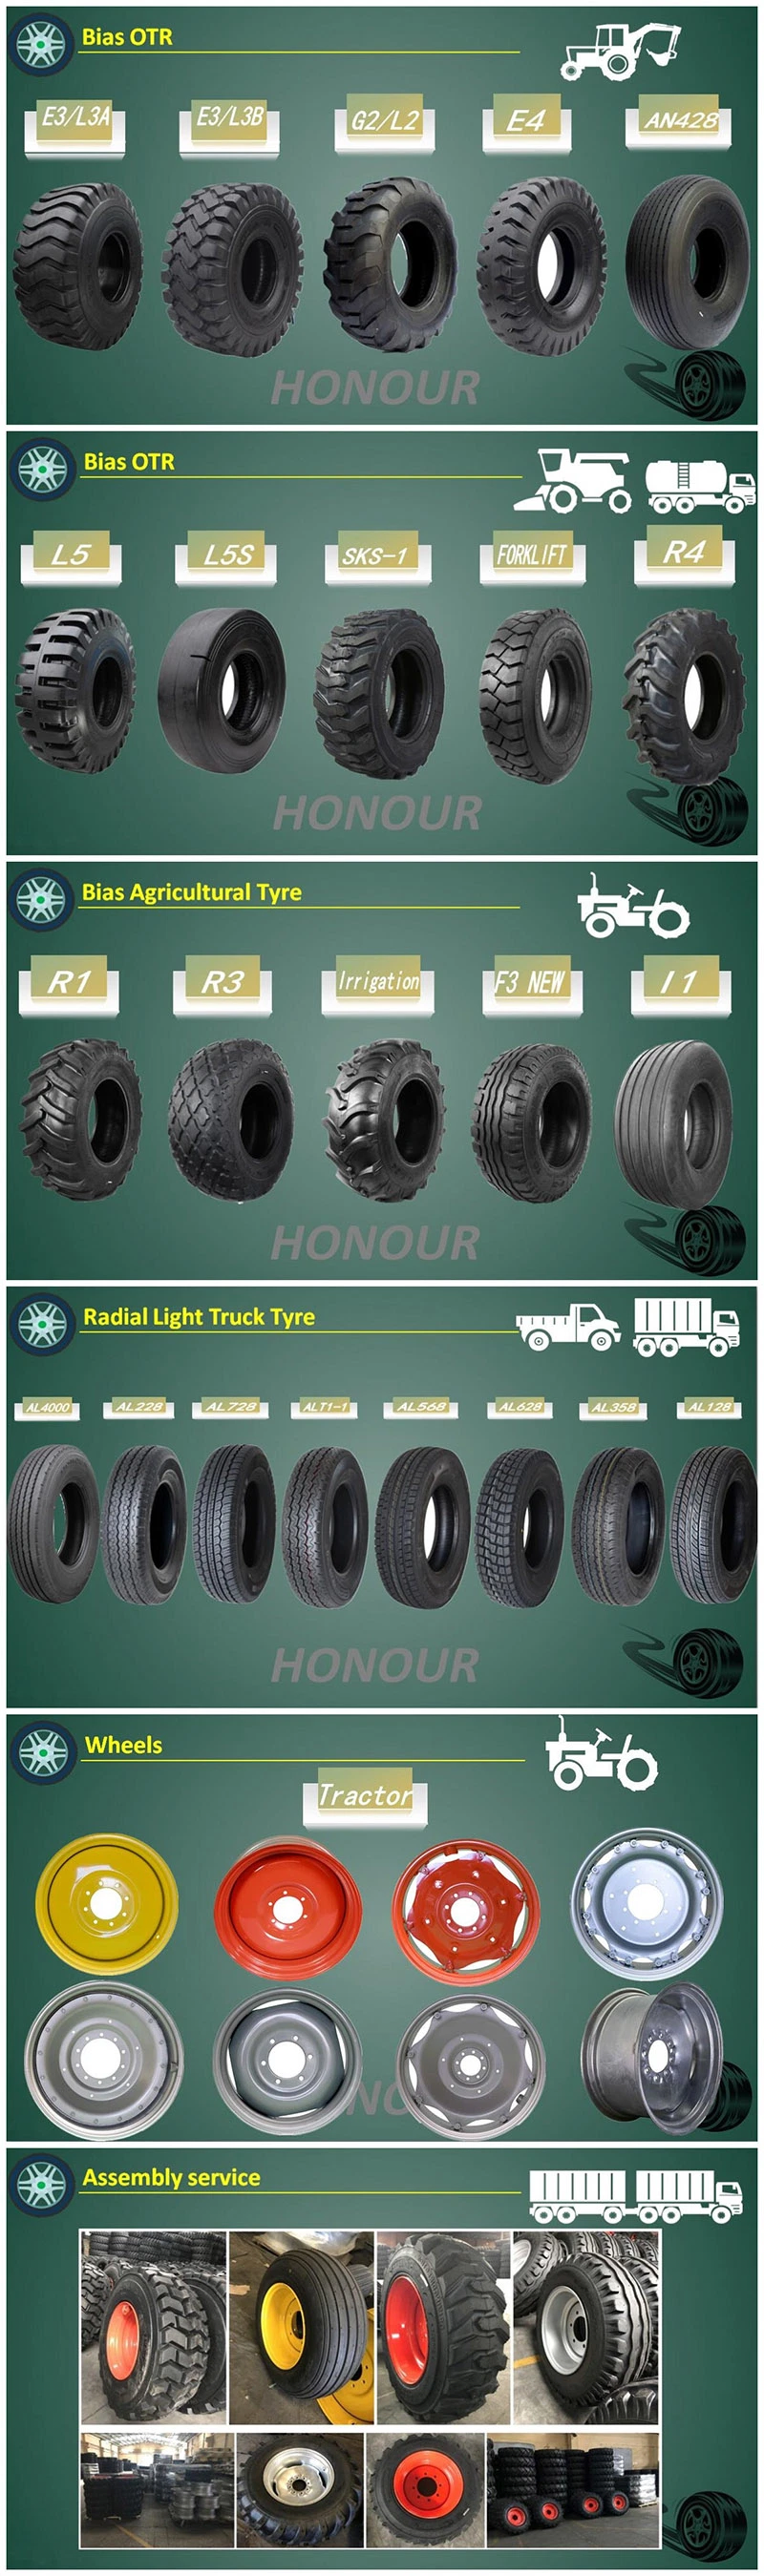 E3/L3 Bias Belted Wheel Loader Grader Earthmover OTR Tyre (17.5-25, 20.5-25, 23.5-25, 26.5-25)